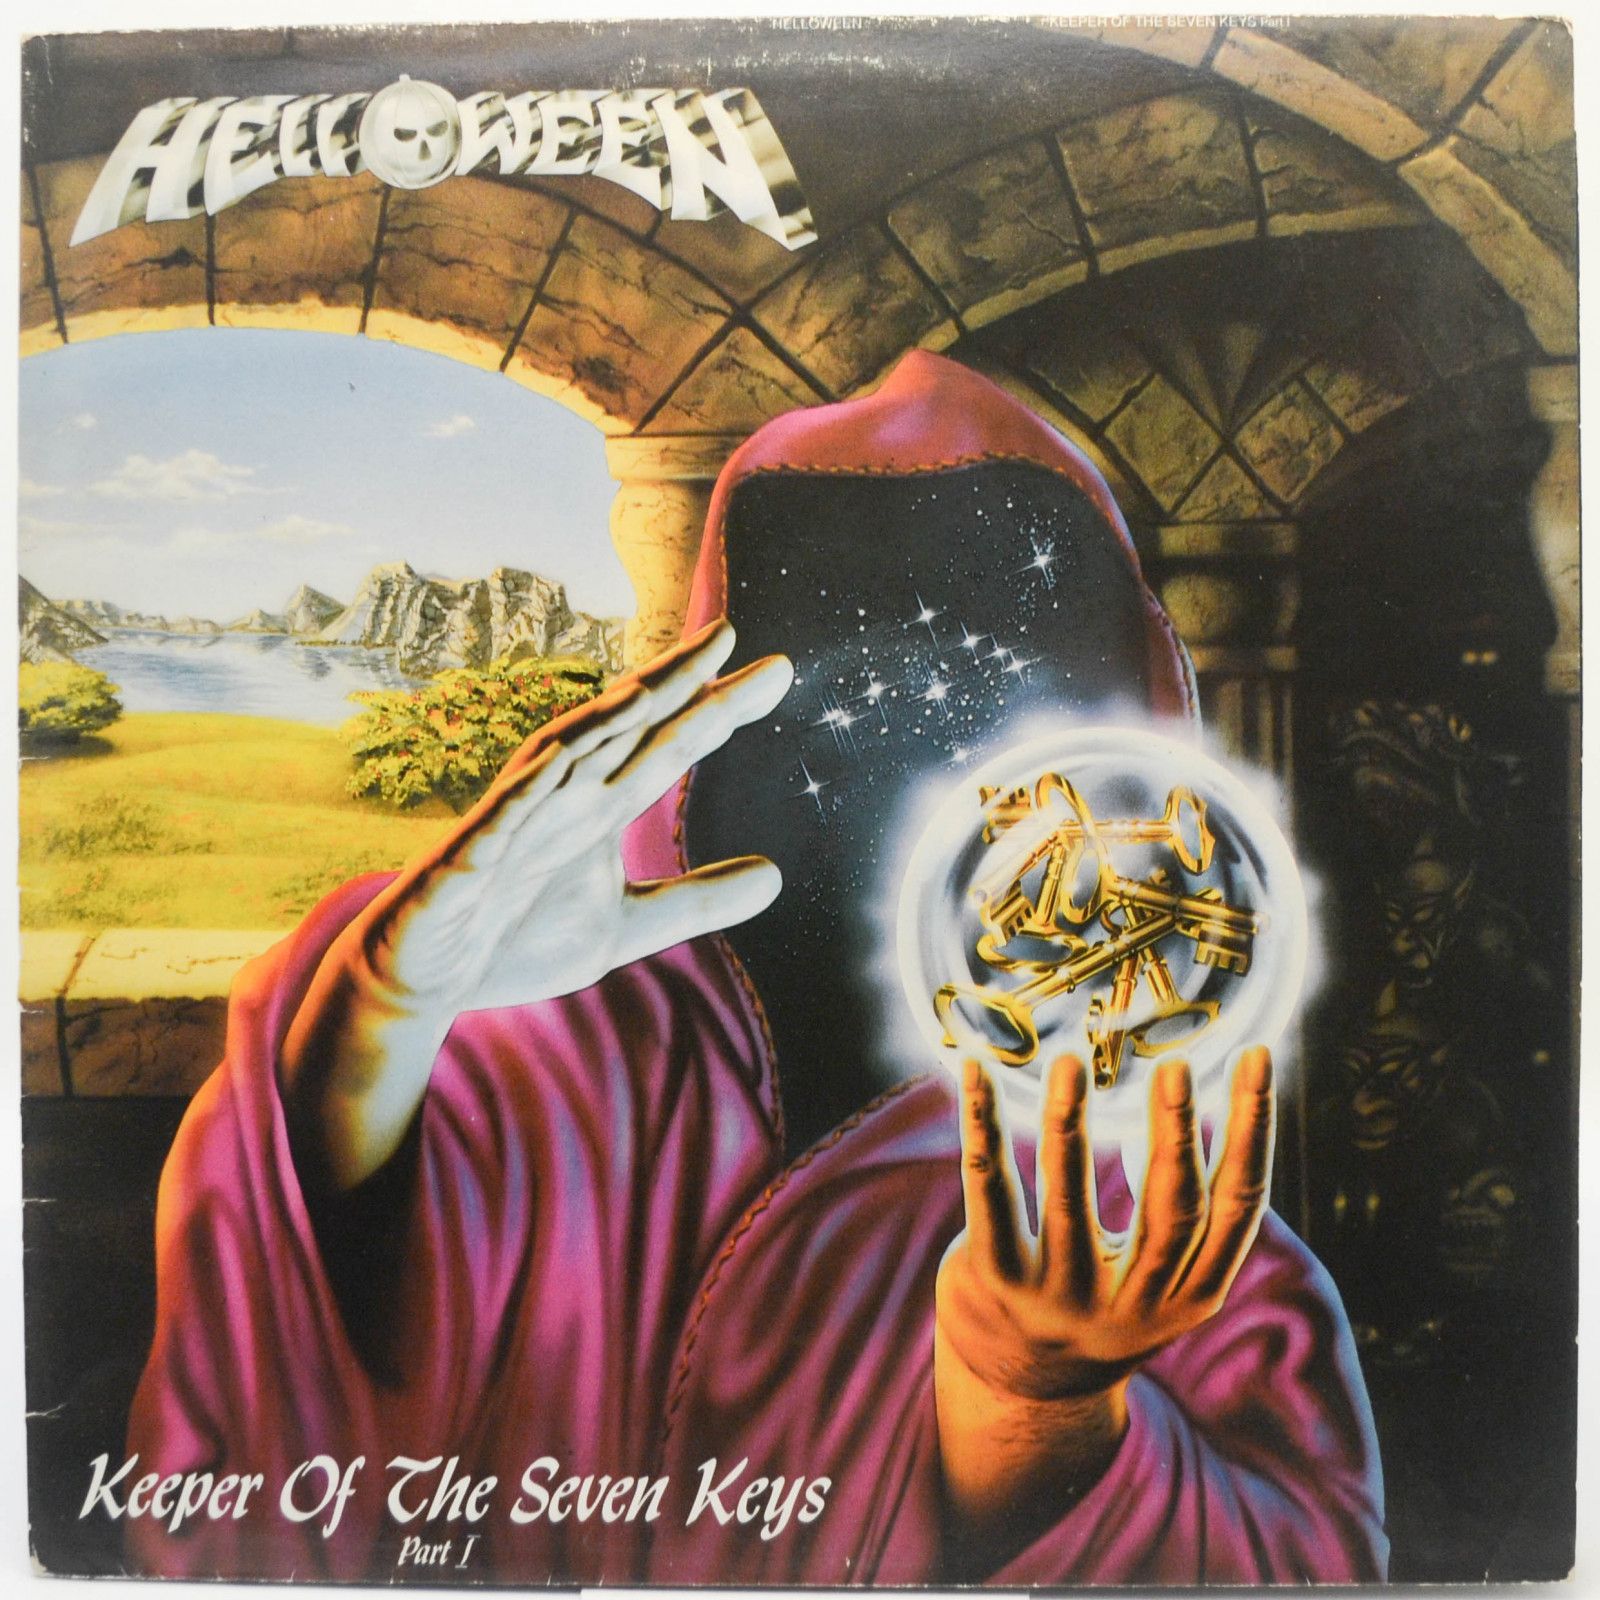 Helloween — Keeper Of The Seven Keys - Part I, 1987